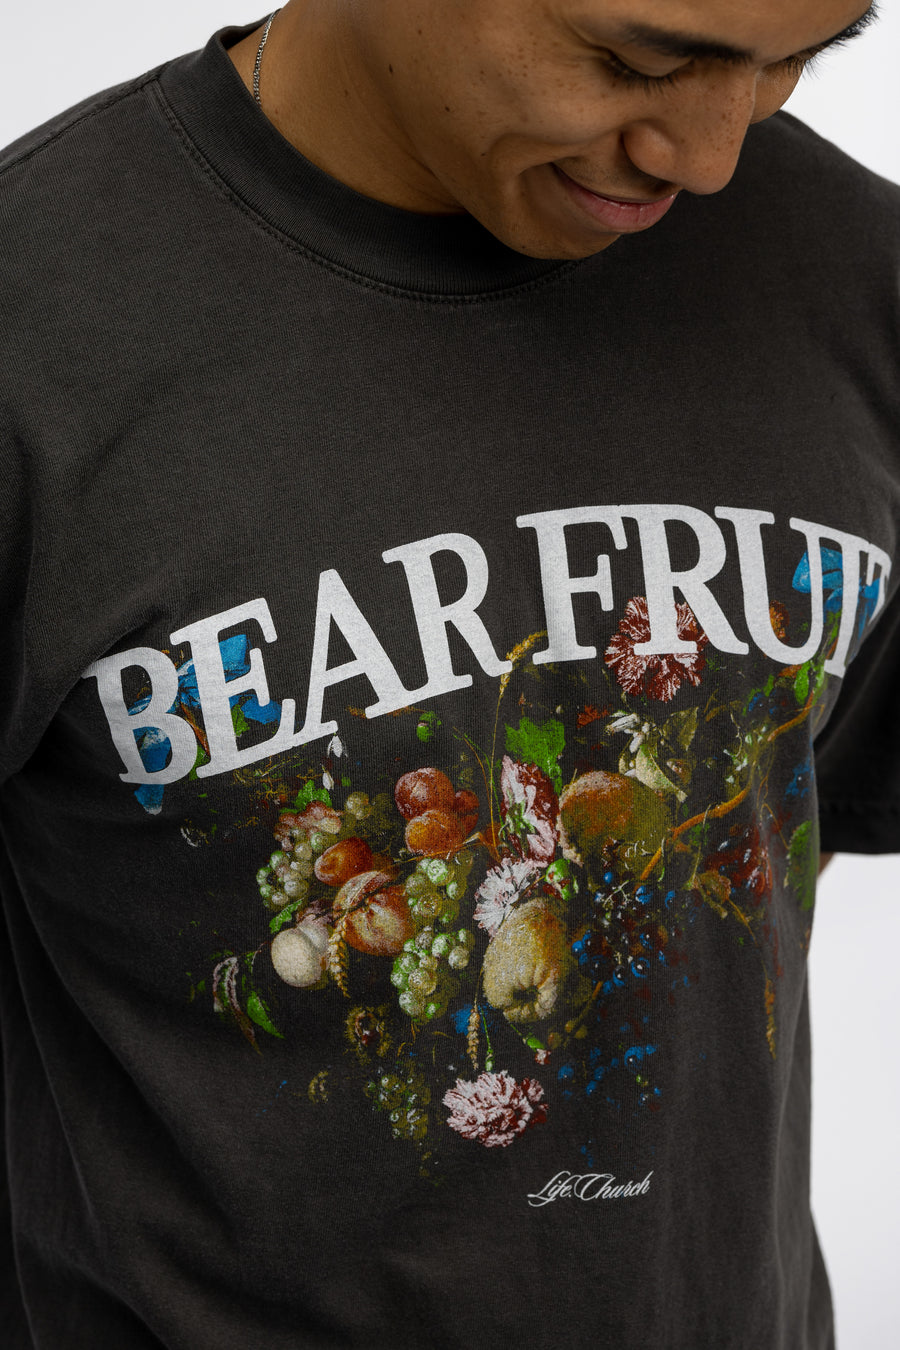 Bear Fruit Tee